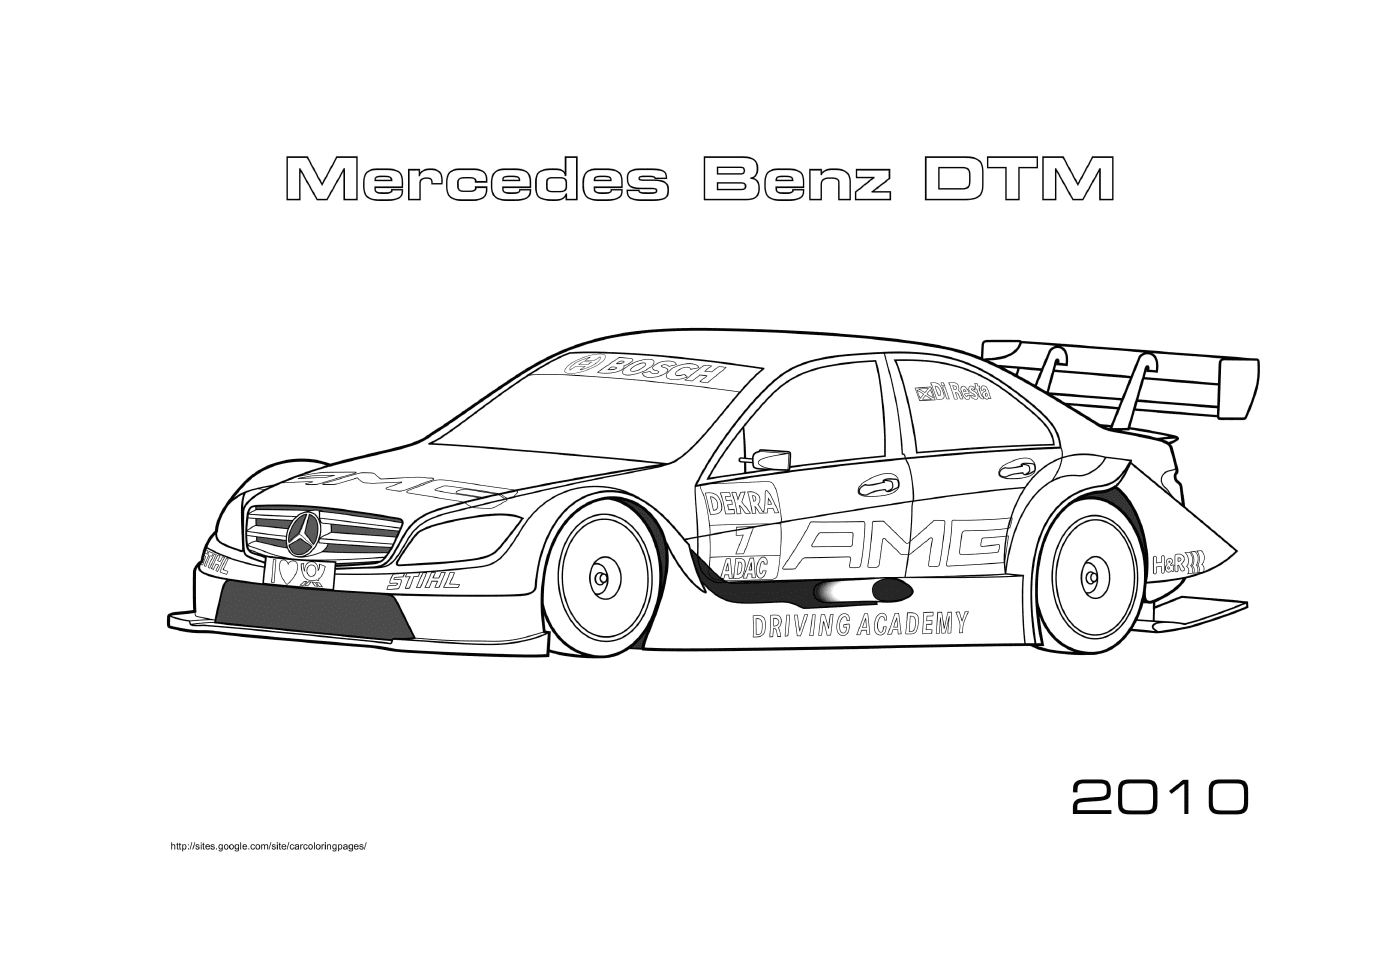  Mercedes Benz DTM 2010, Rennwagen 